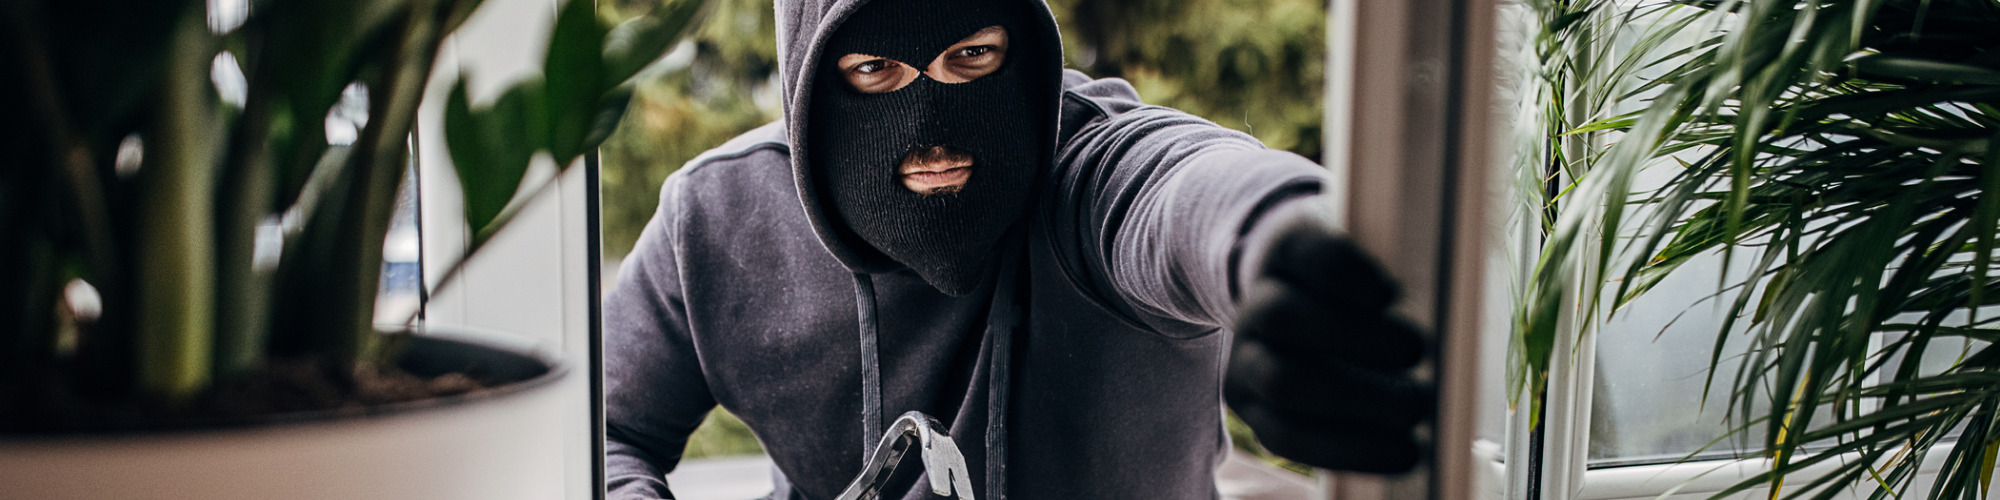 Theft & Burglary - Sharpen Your Knowledge 